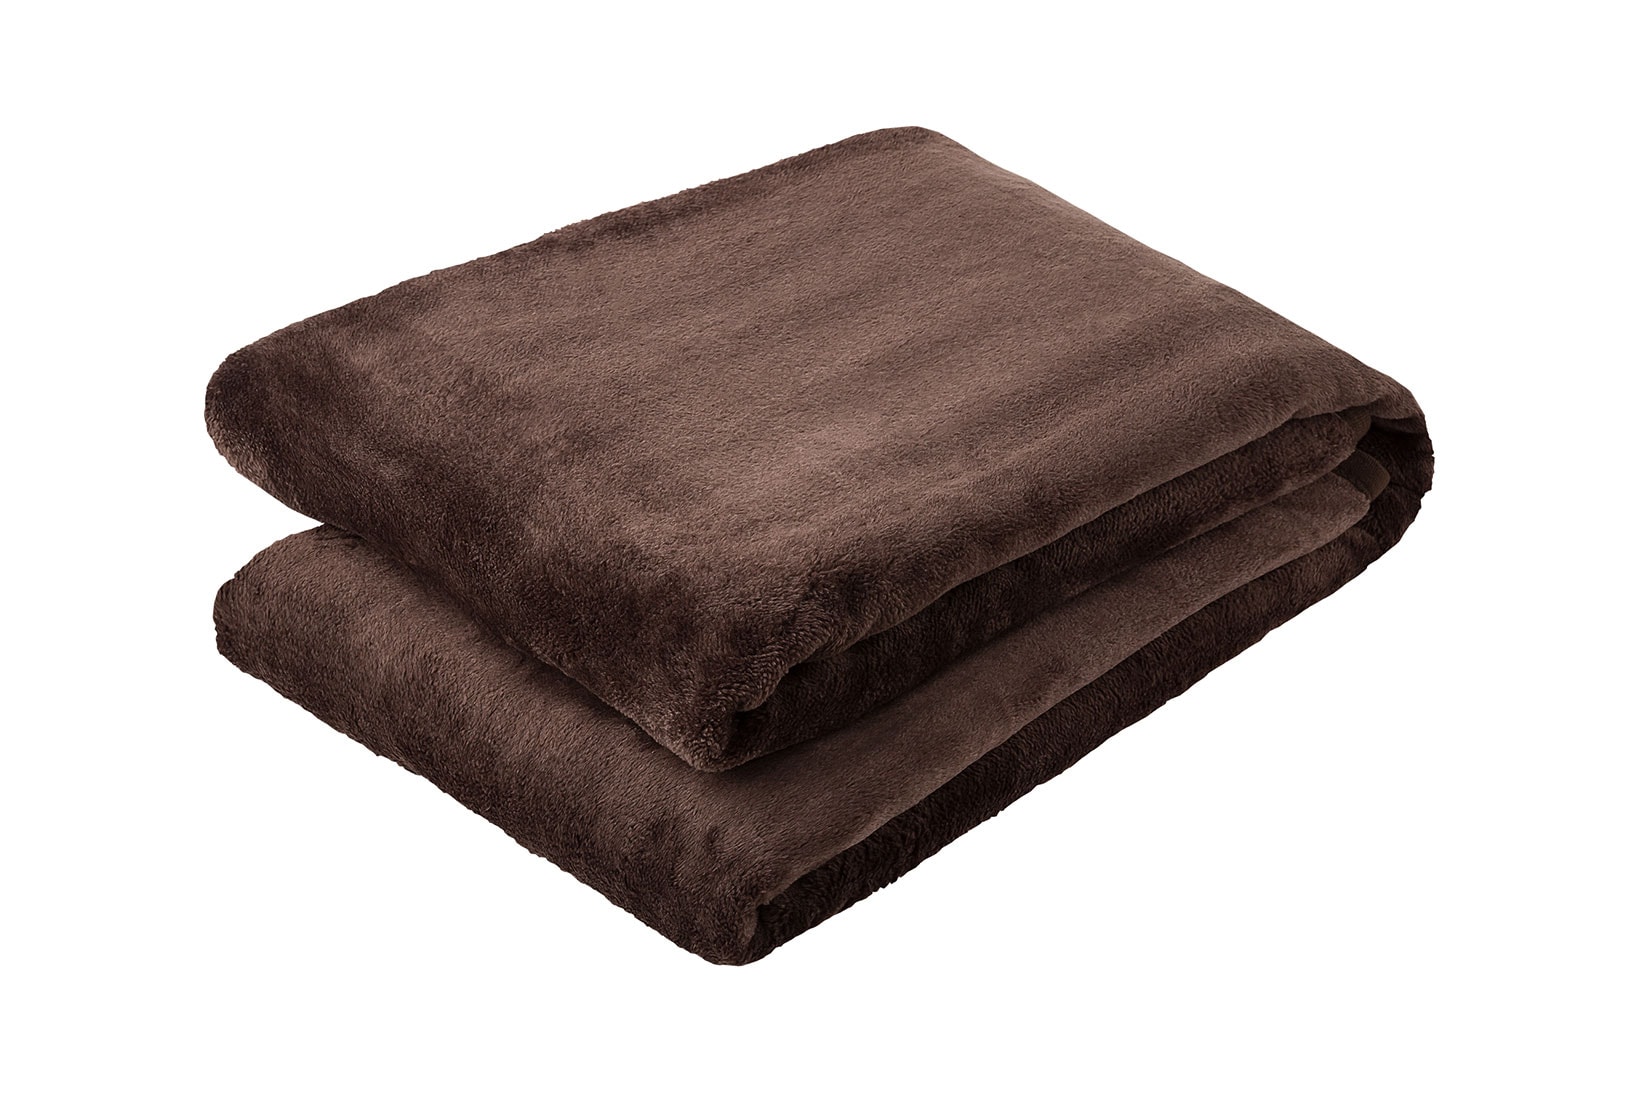 uniqlo heattech blankets winter bedding warm beige gray brown sleep home